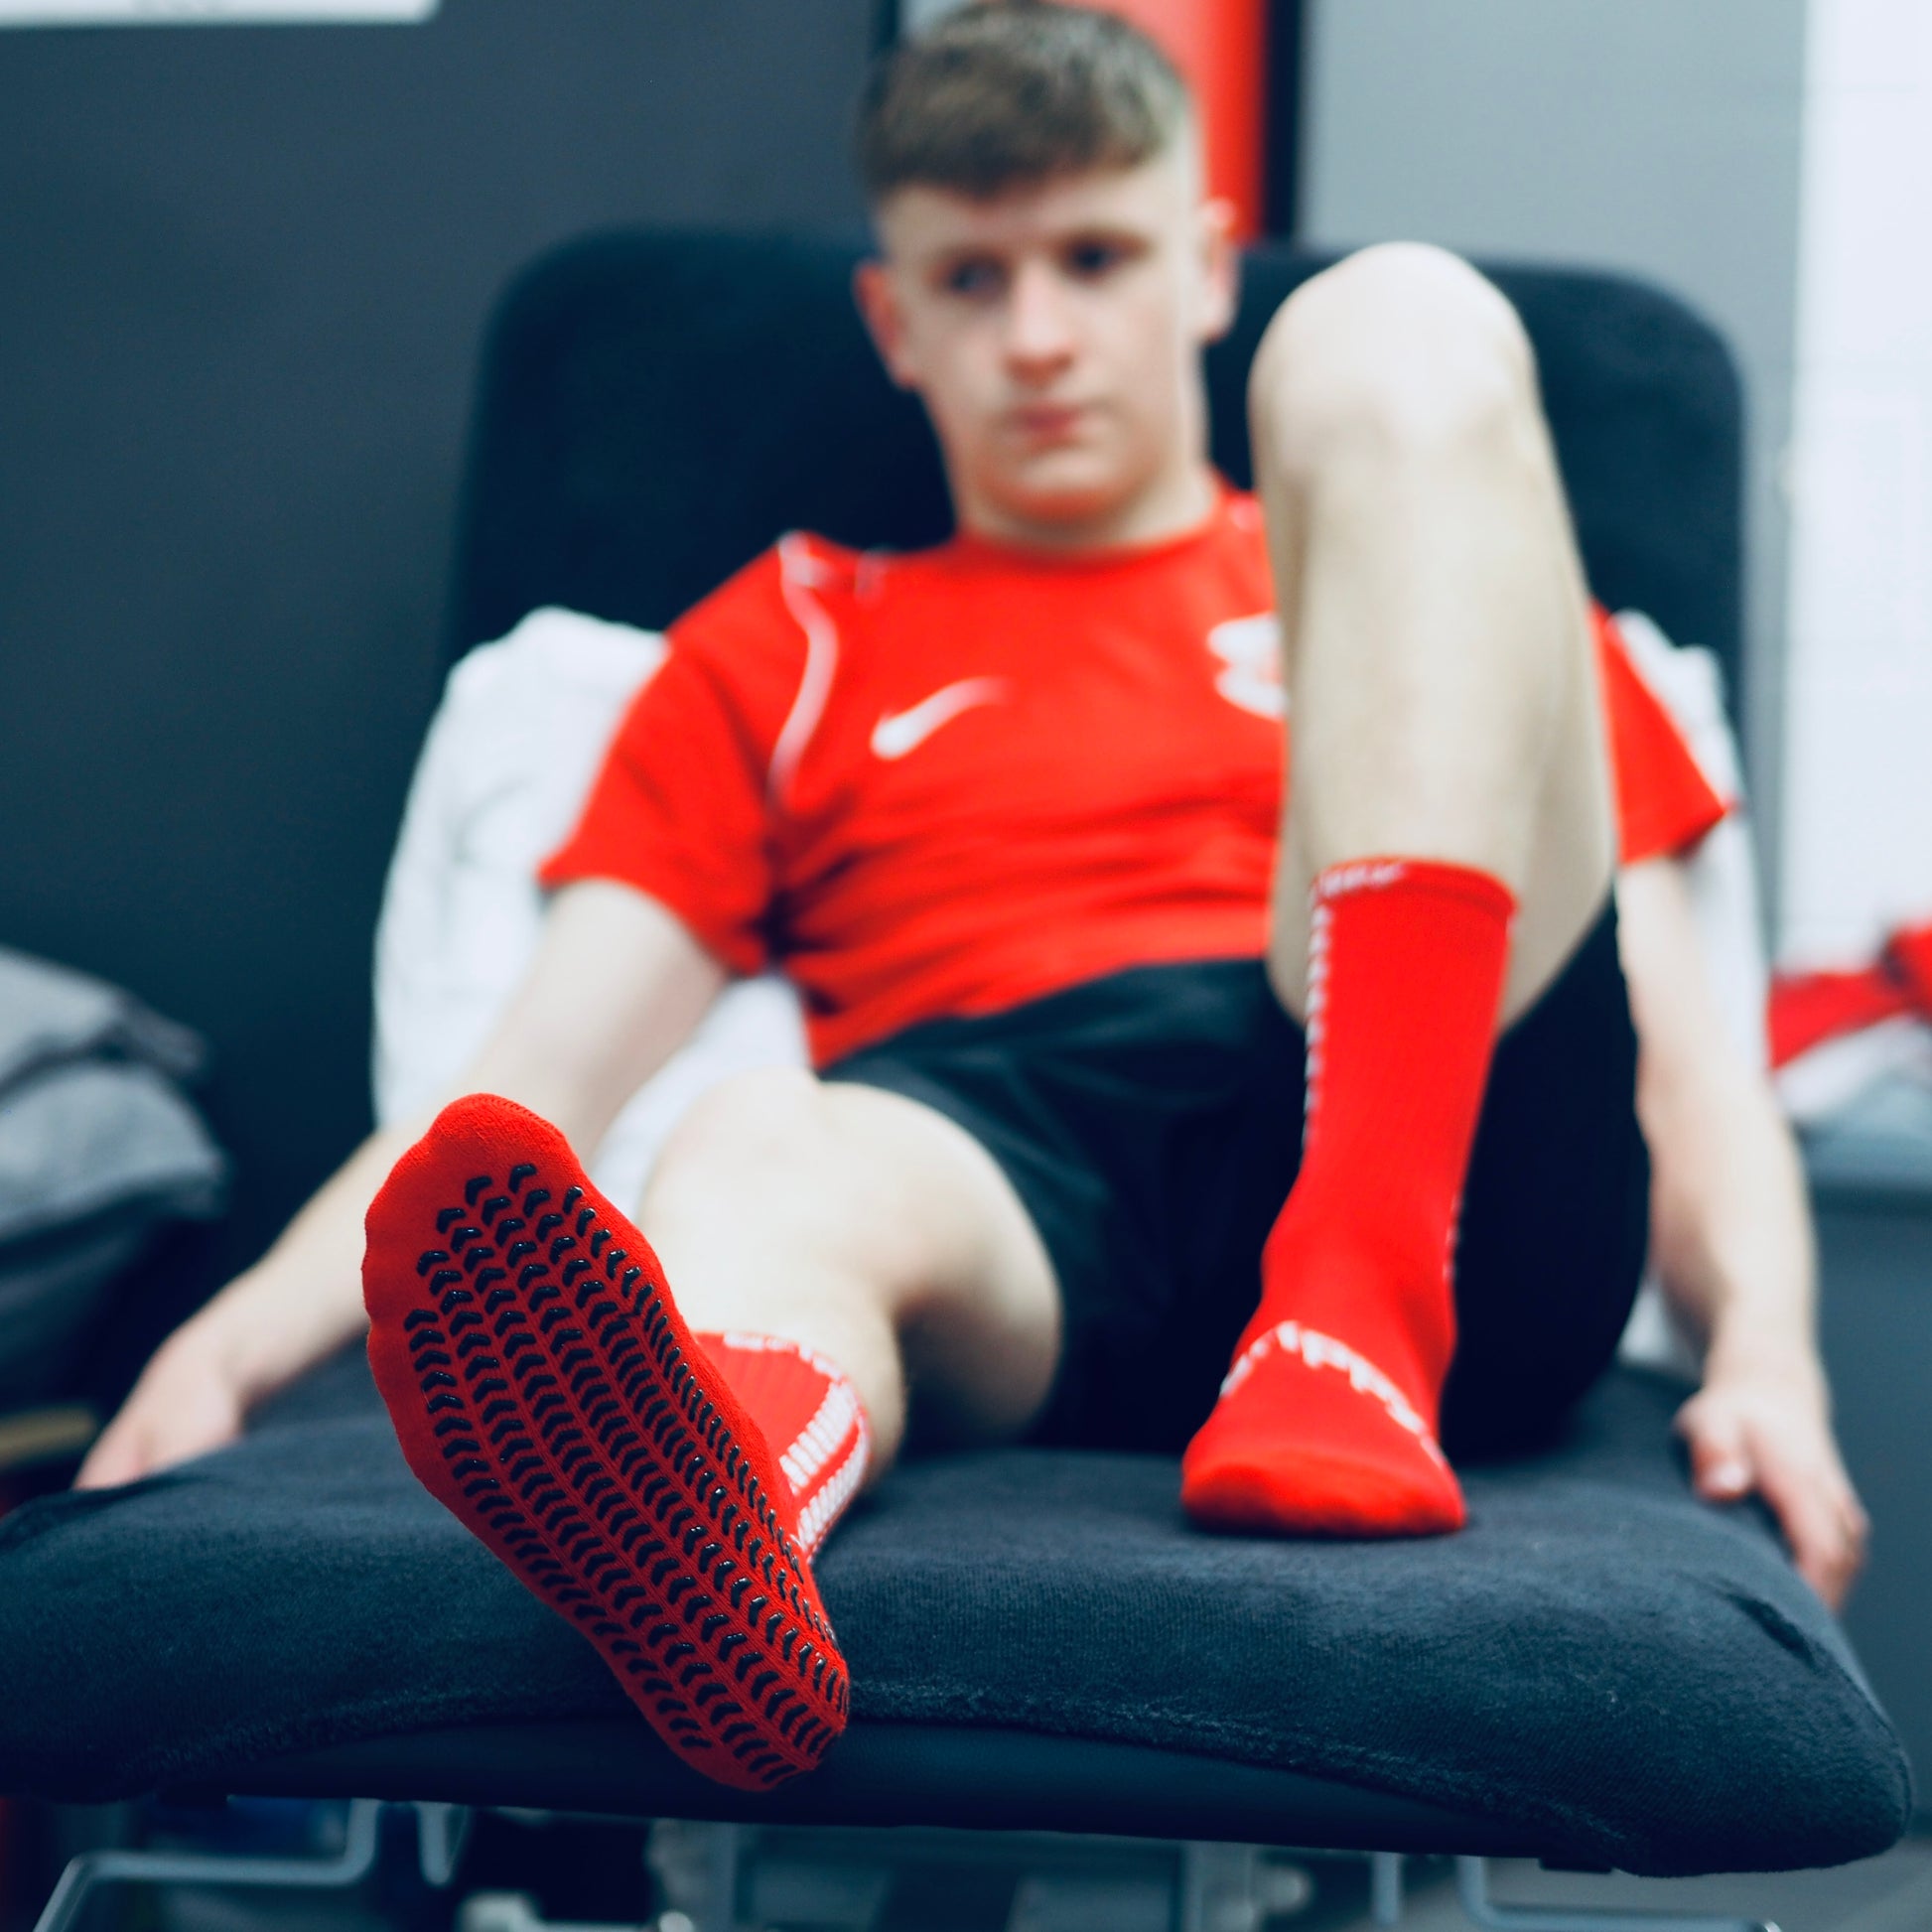 Red Football Socks, Grip Socks